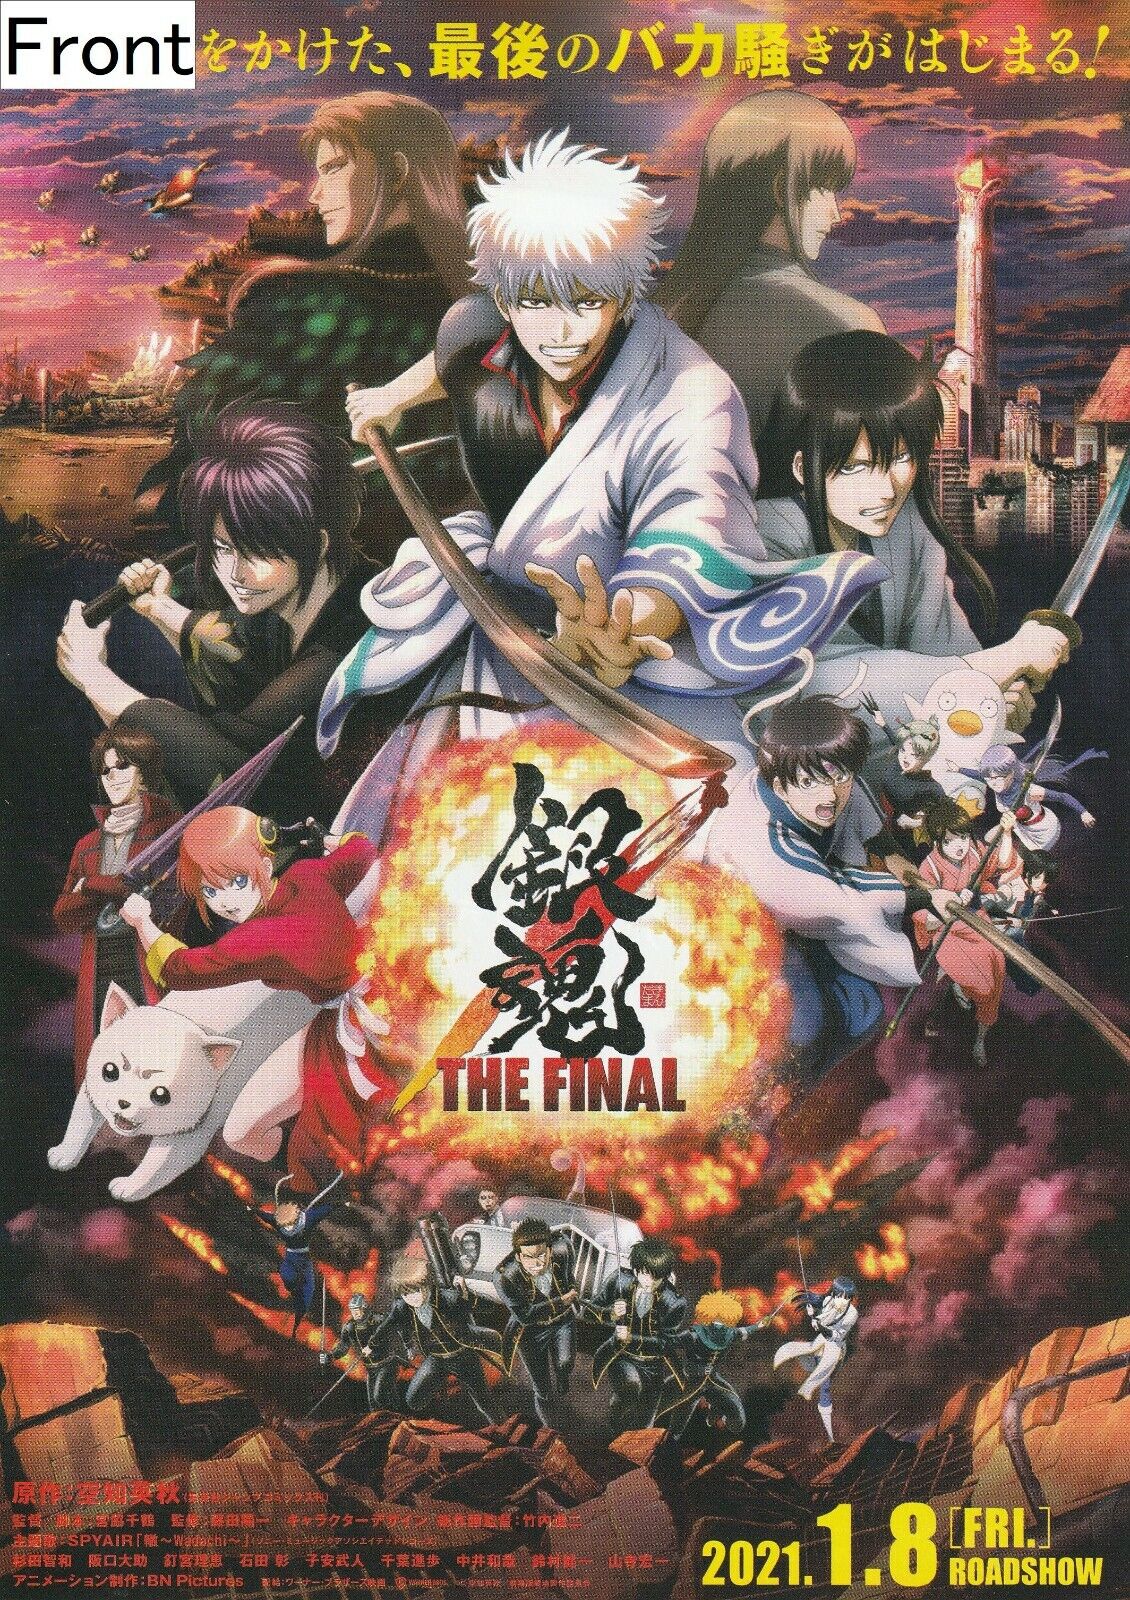 Gintama The Final (2021 Japanese Anime) Promotional Poster TypeB